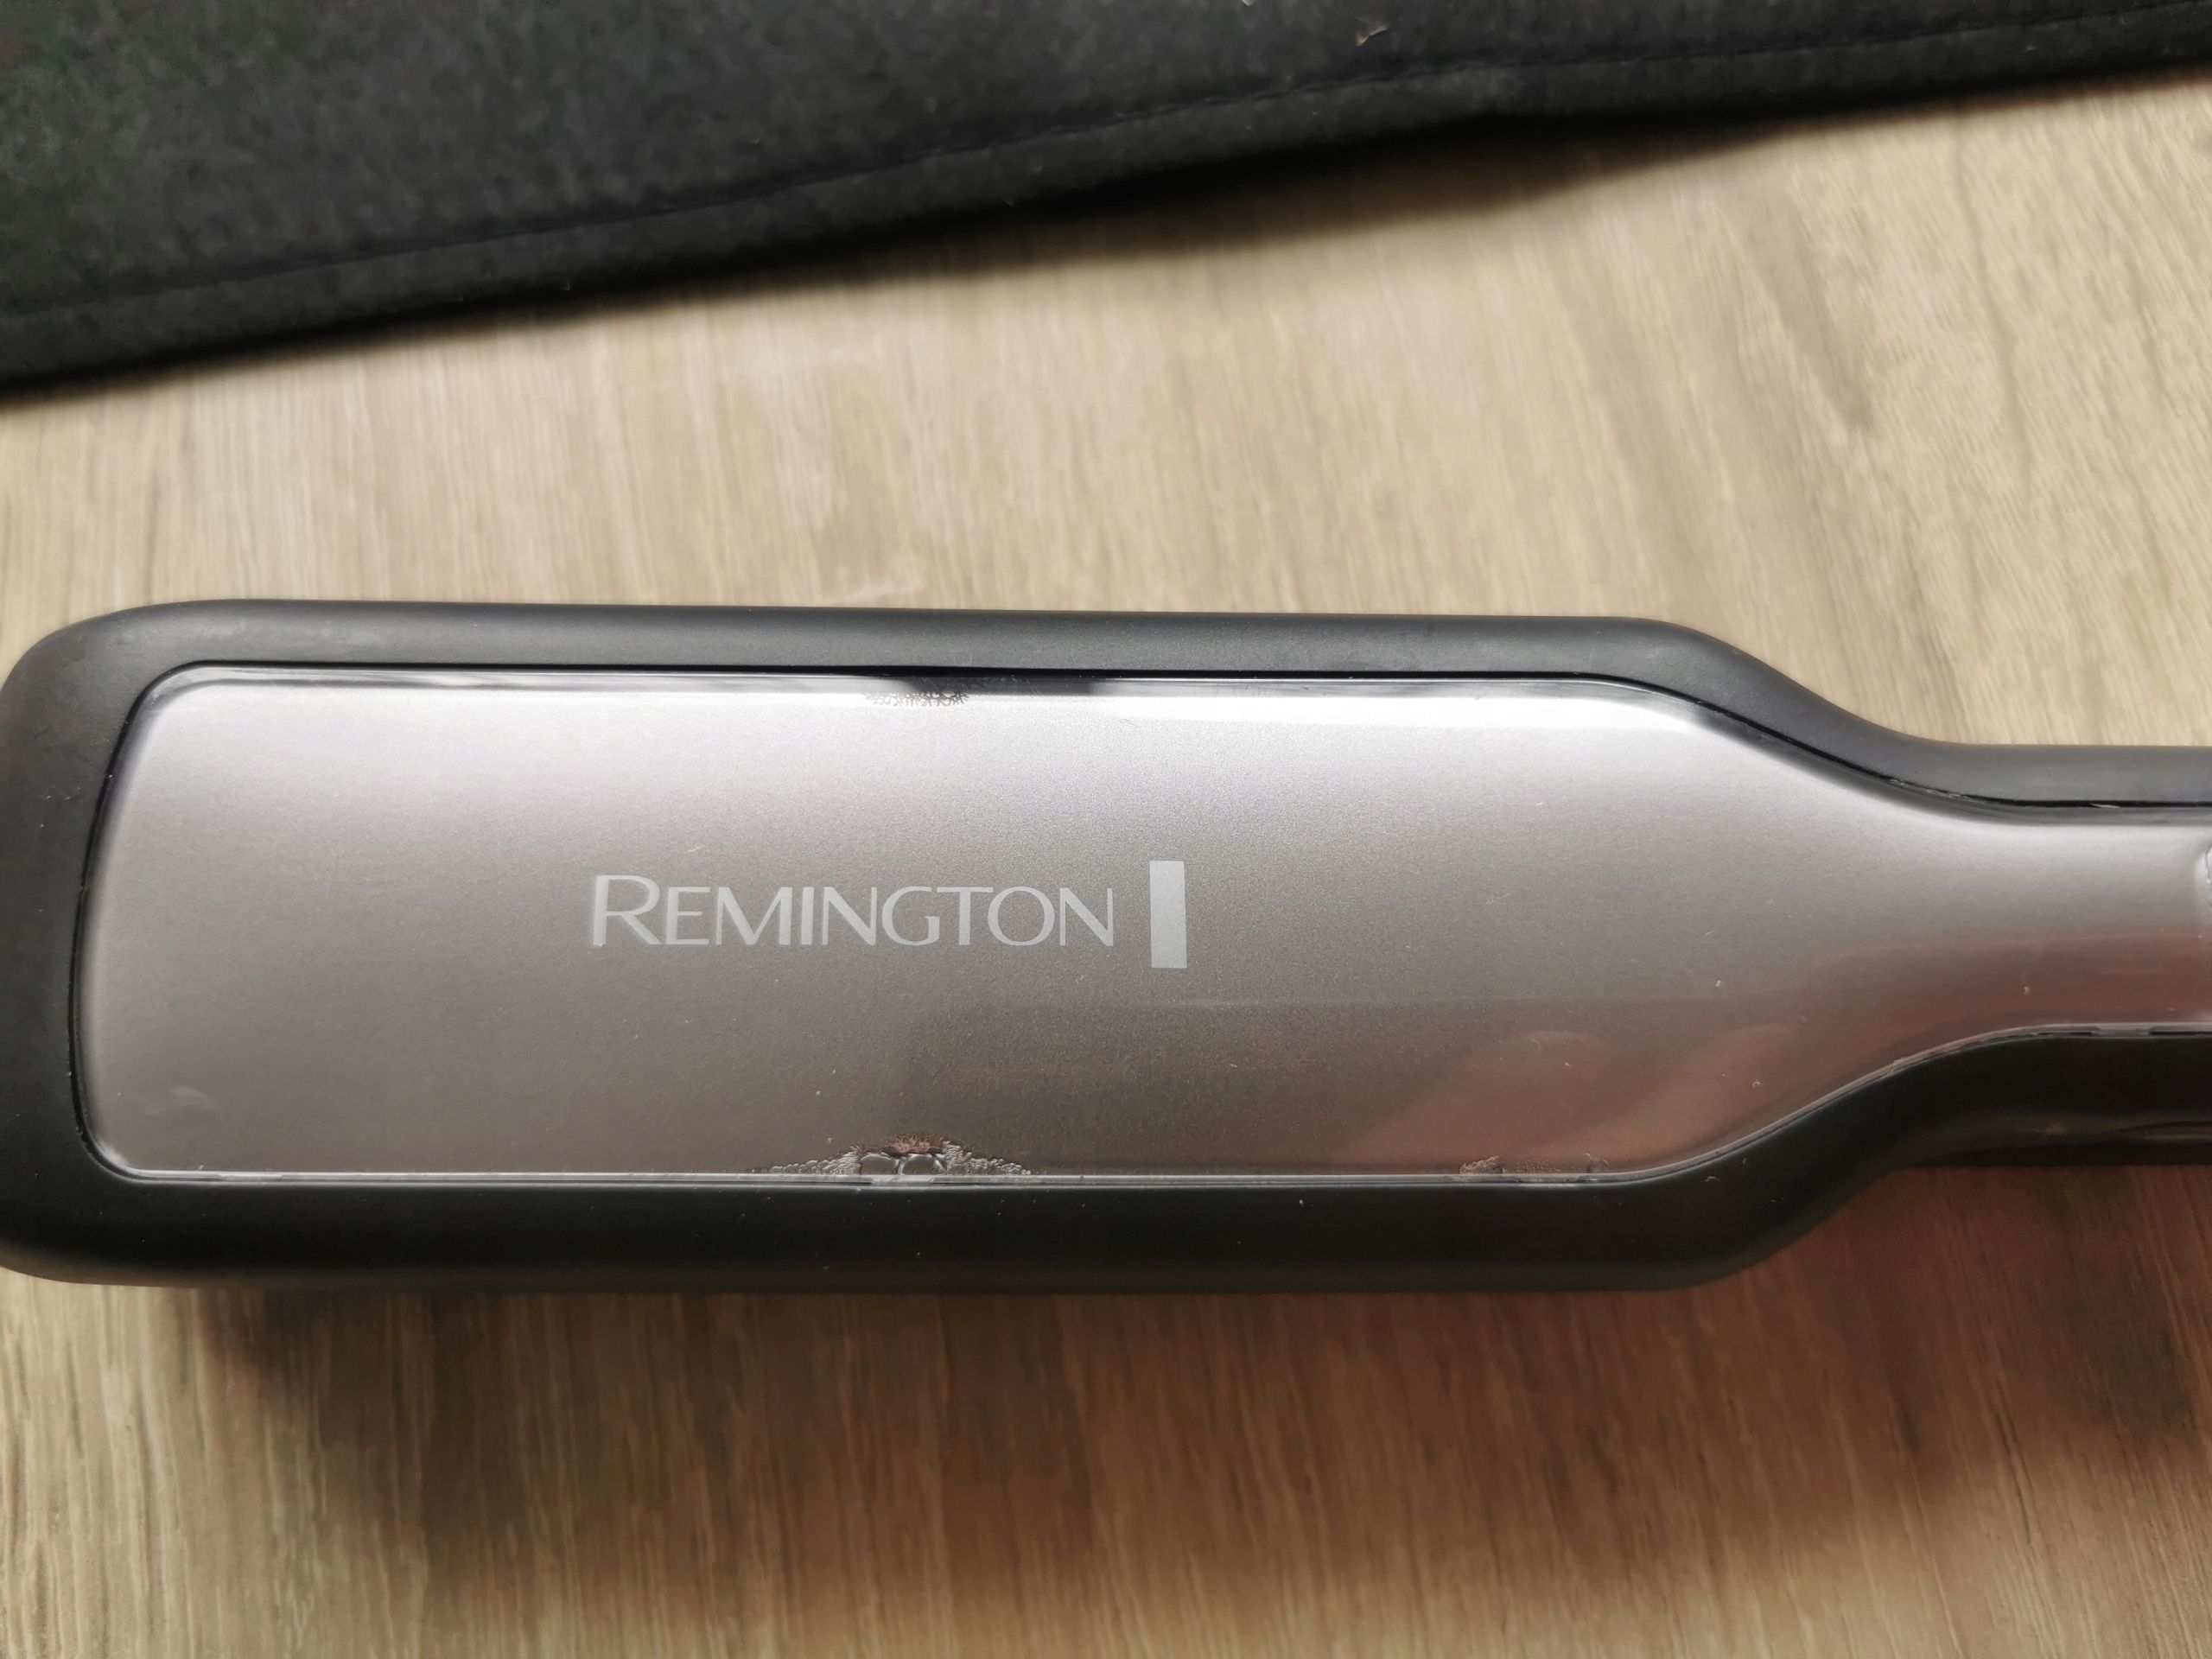 Prostownica Remington S5525